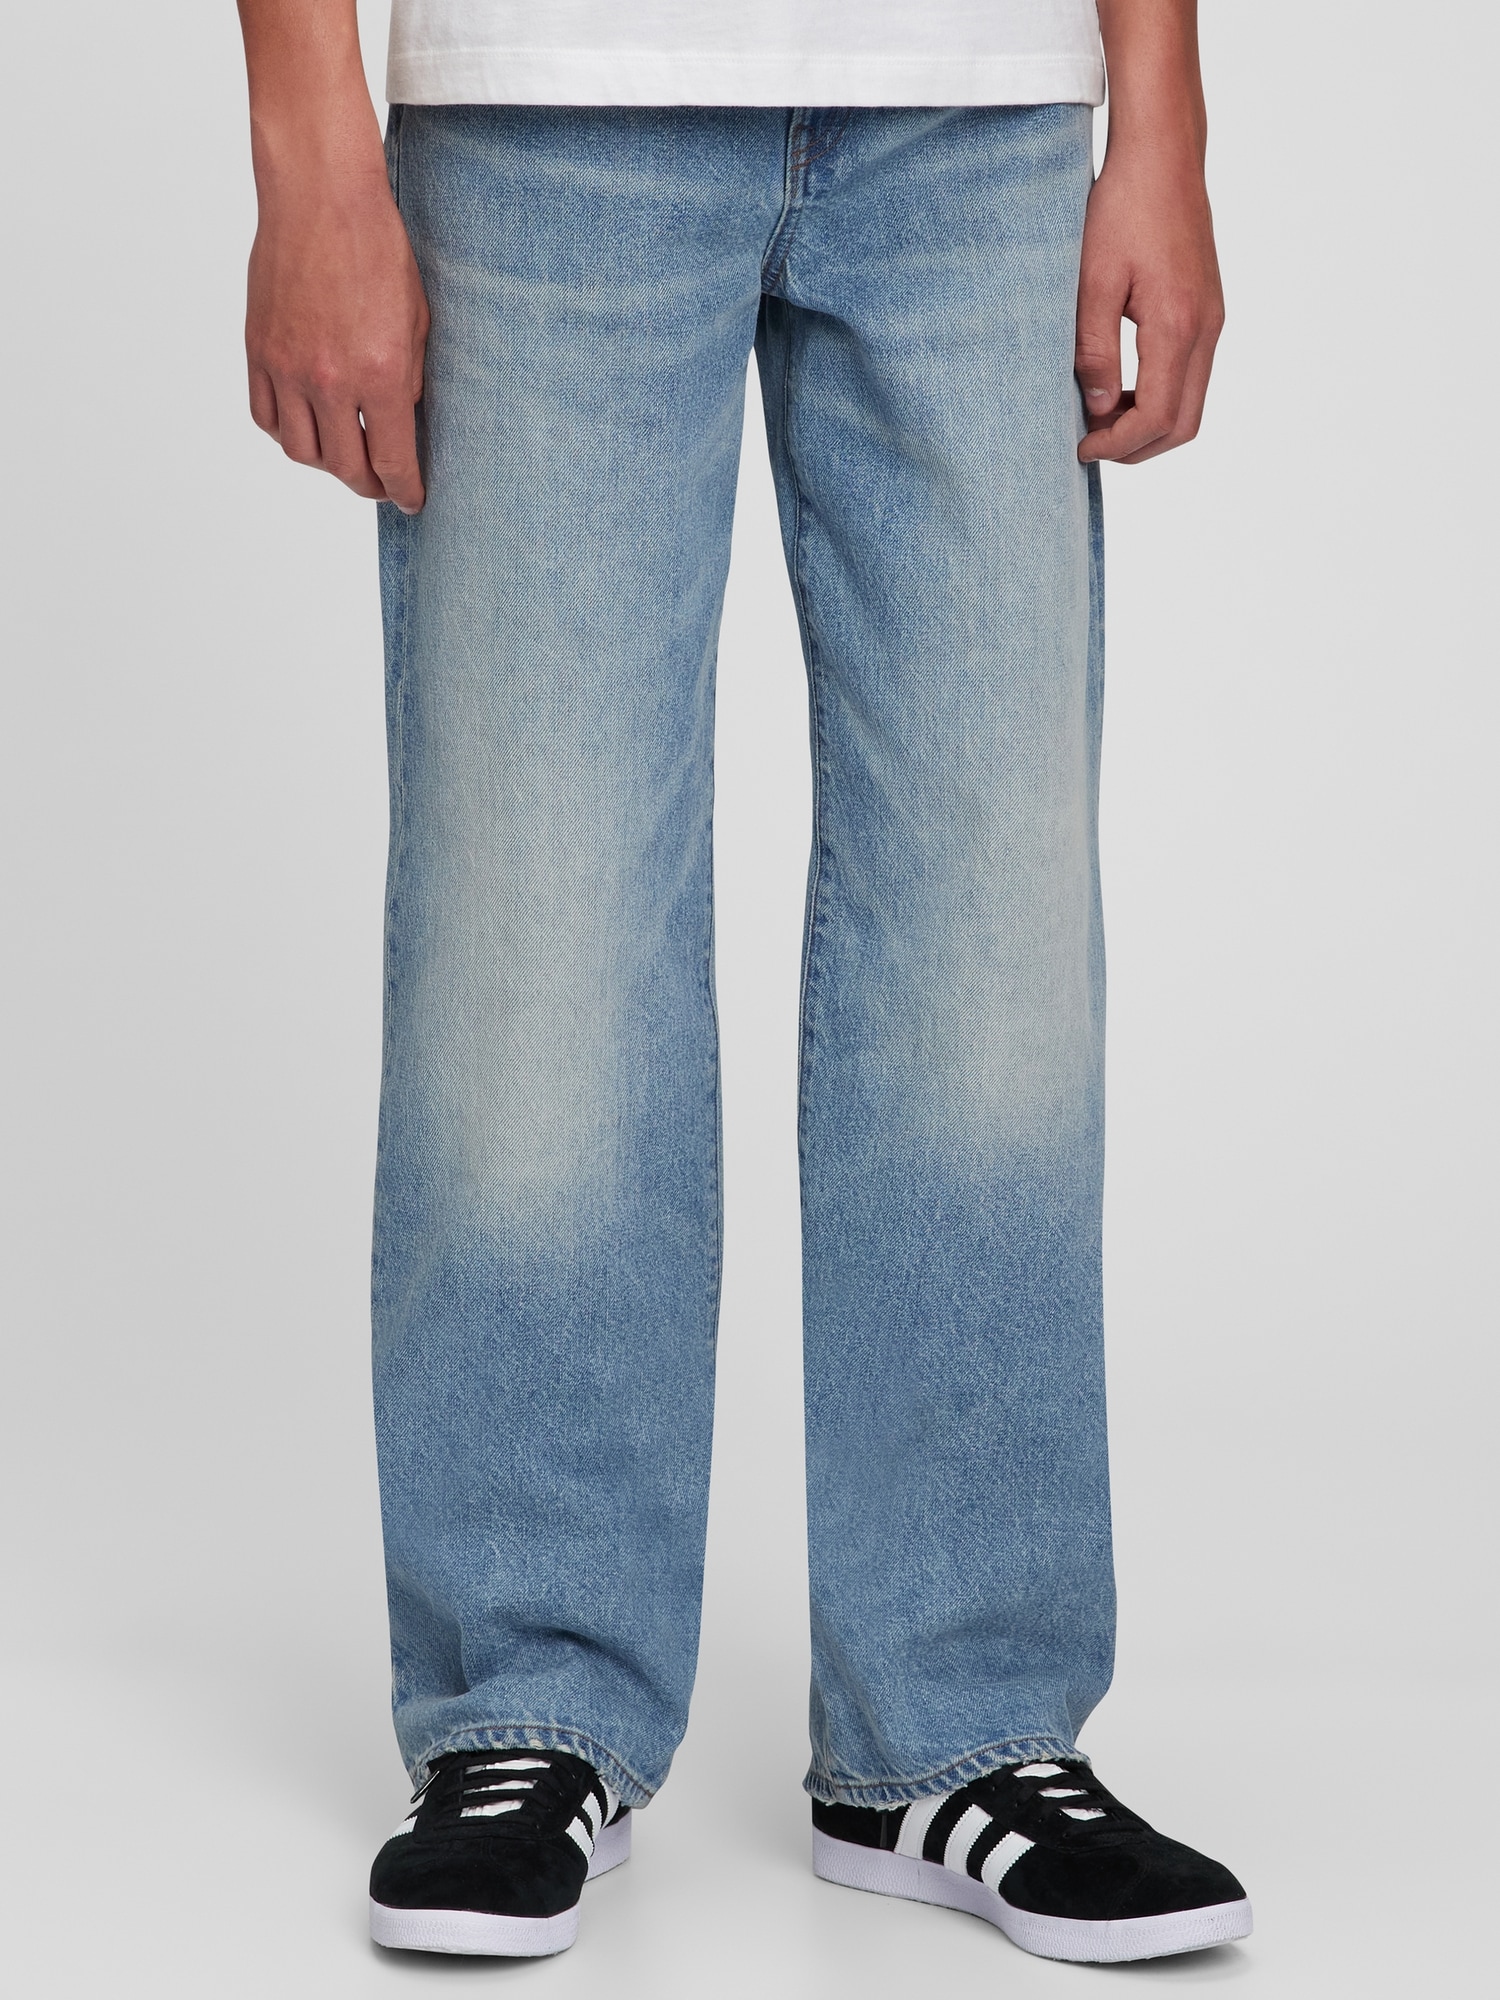 Camila's Store - Jeans Gap para Hombre 100%